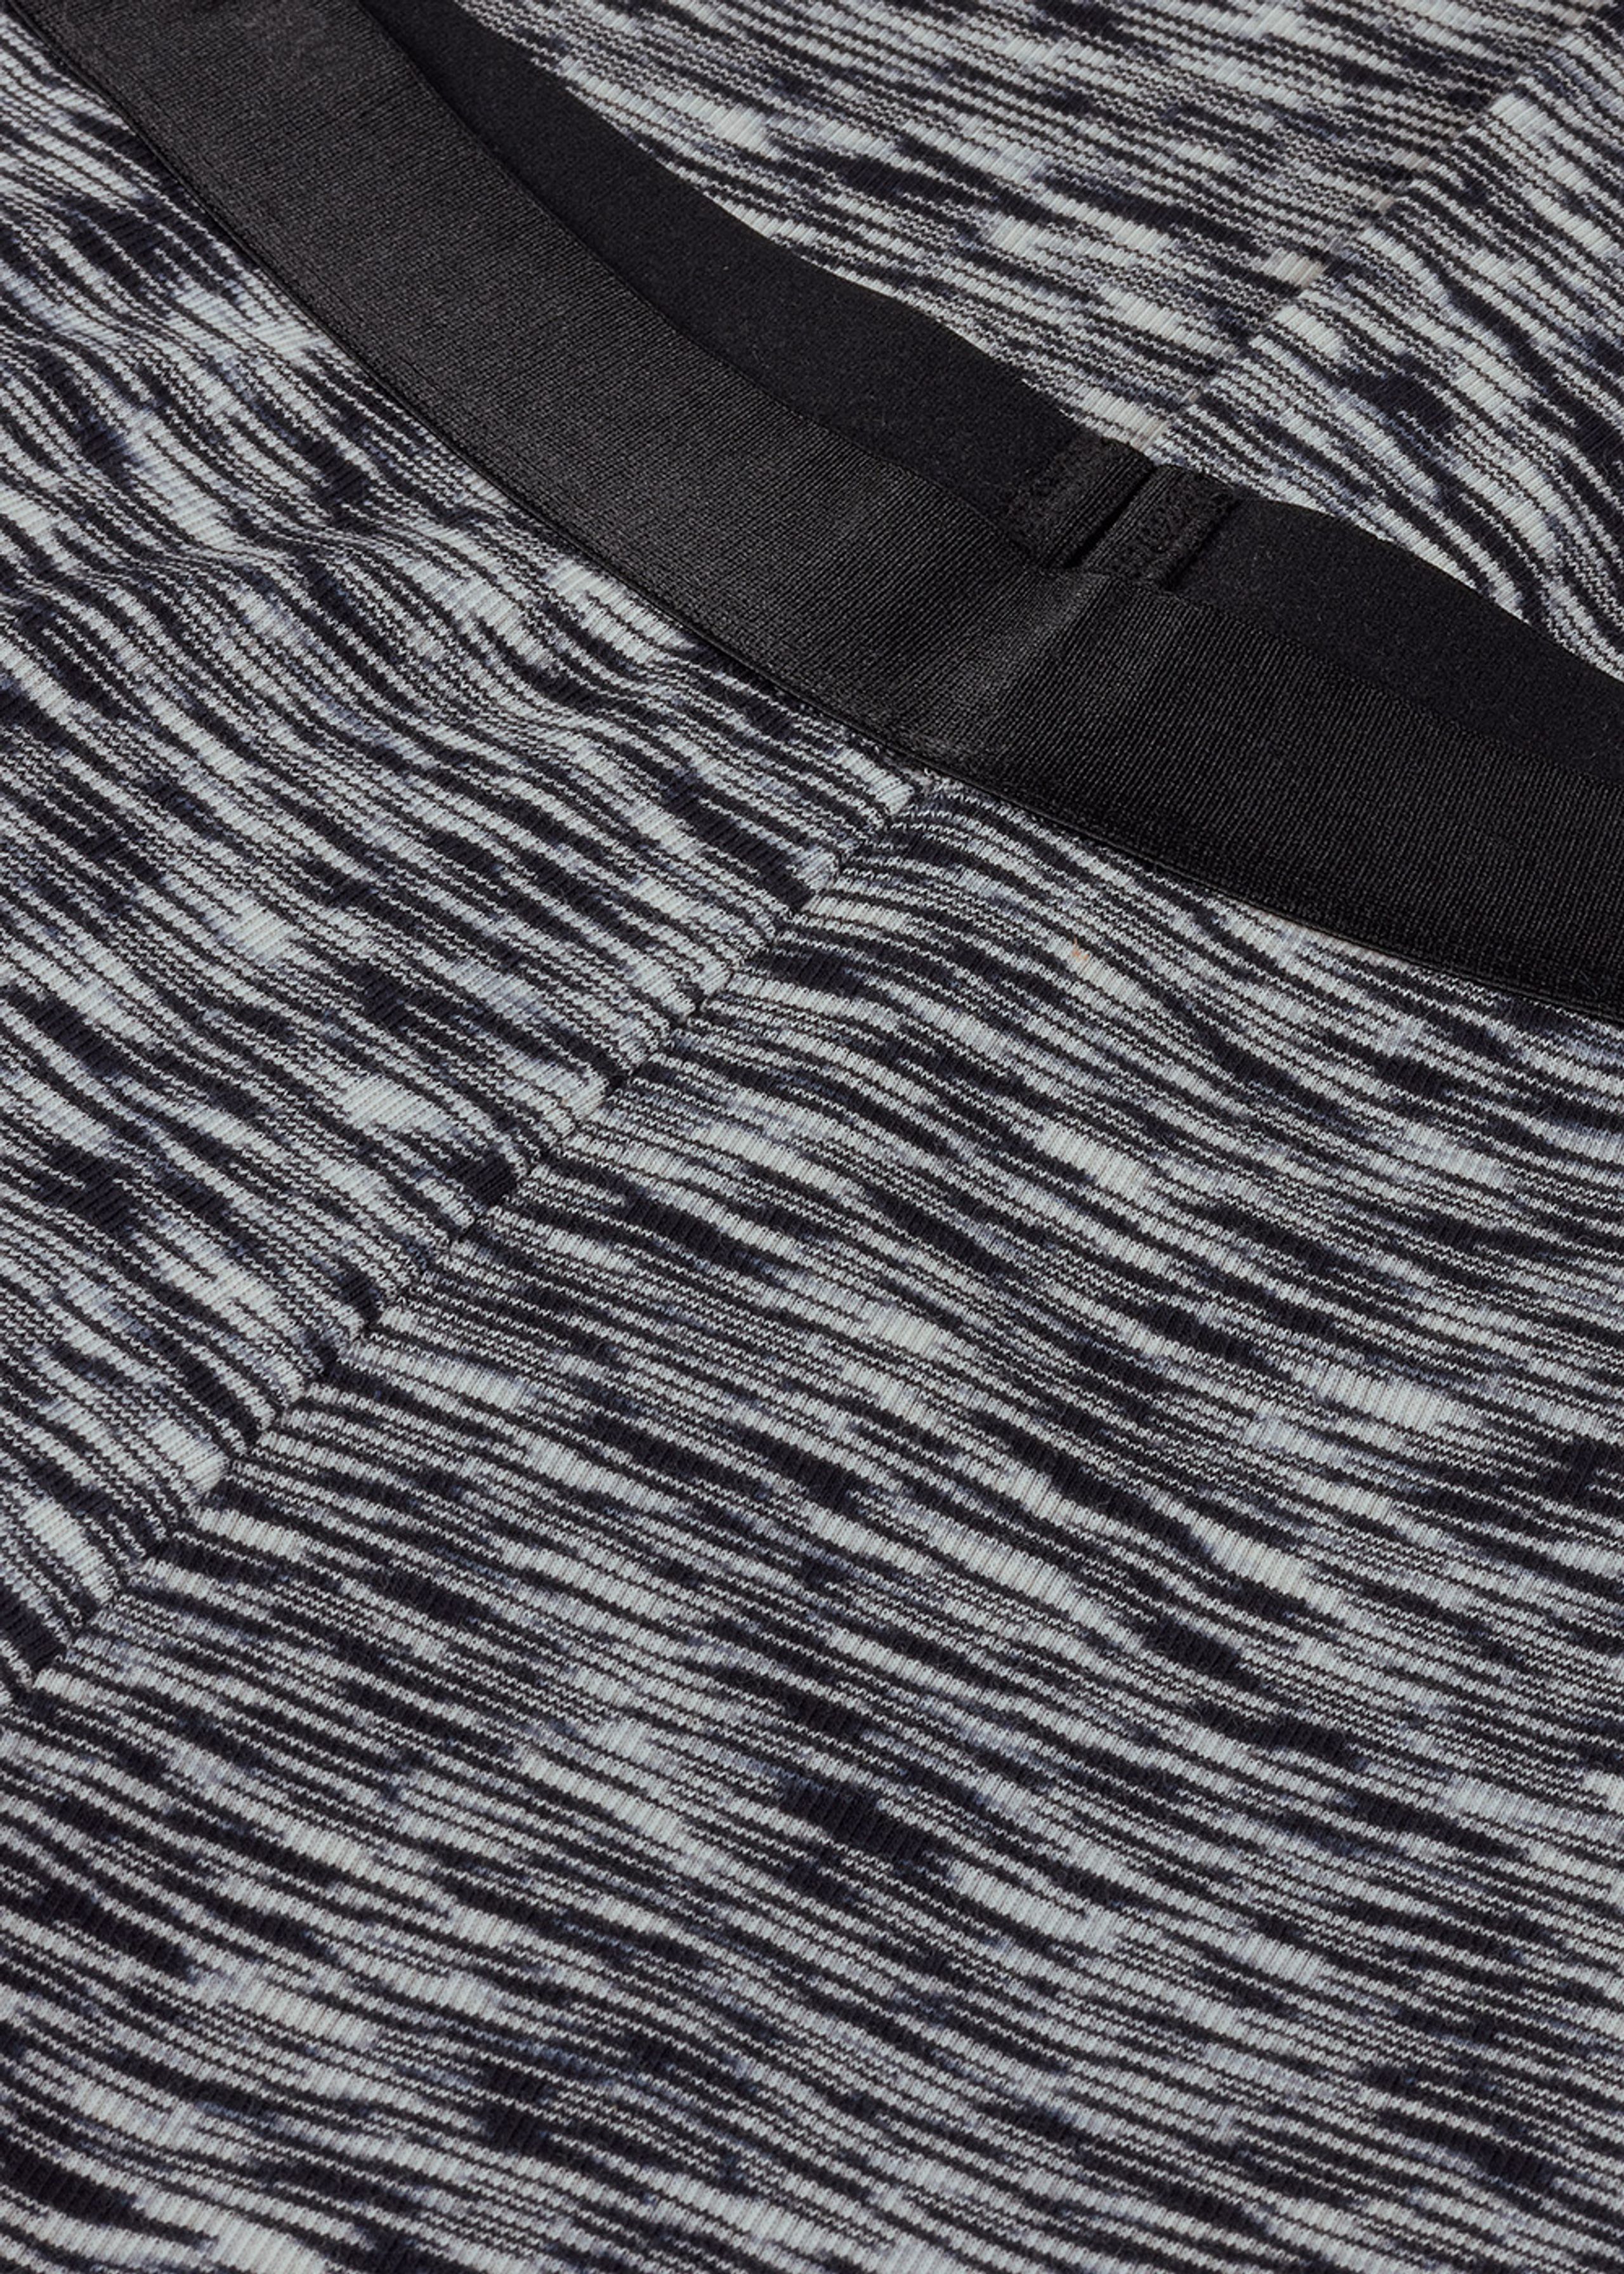 Mads Nørgaard - Hose - 2x2 Cotton Space Veran Pants - Multi Black